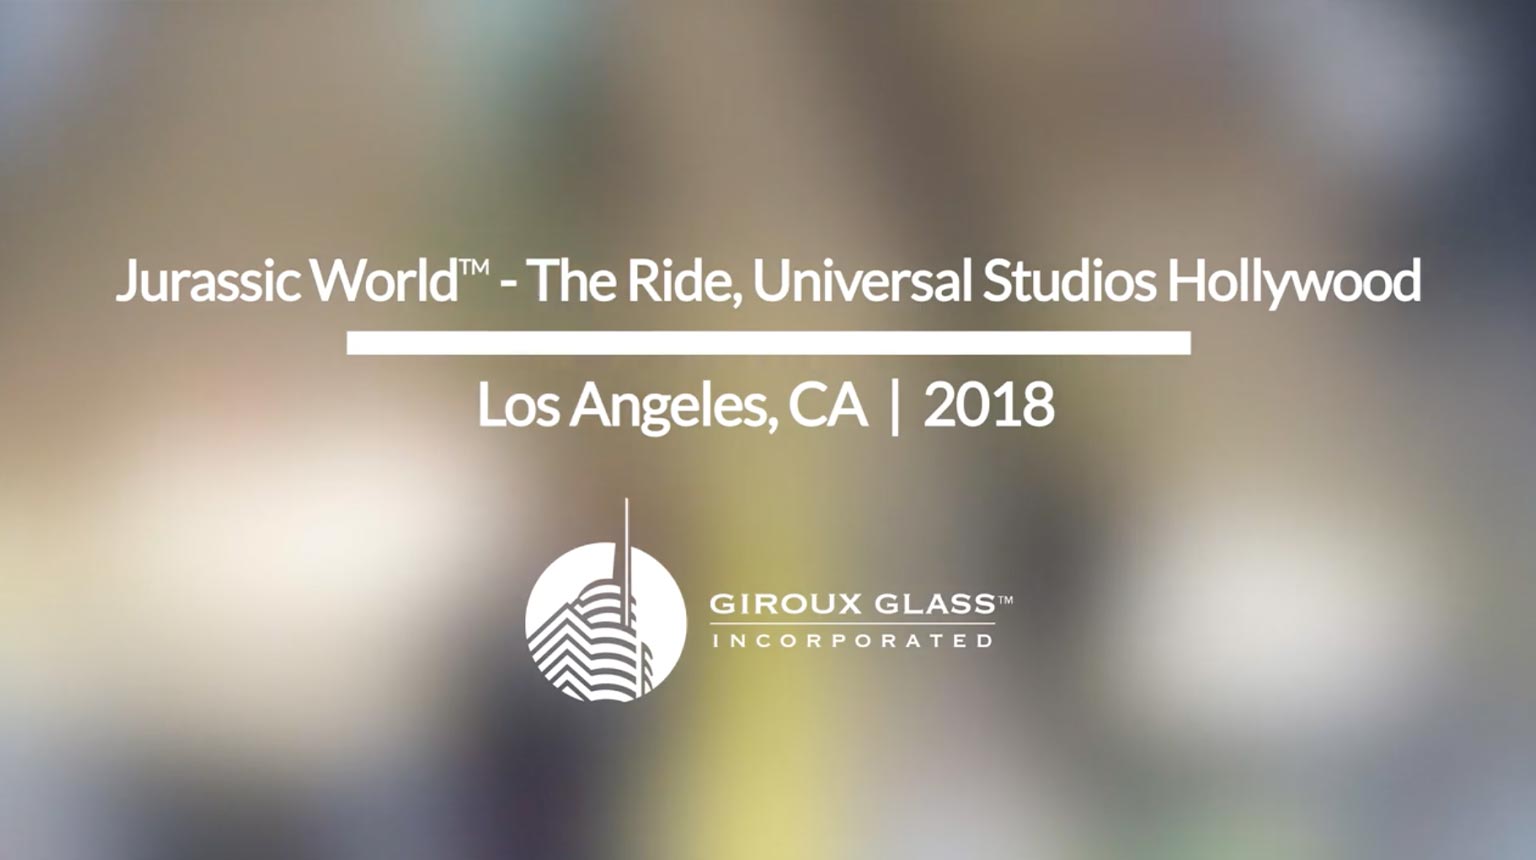 Jurassic World – The Ride, Universal Studios Hollywood